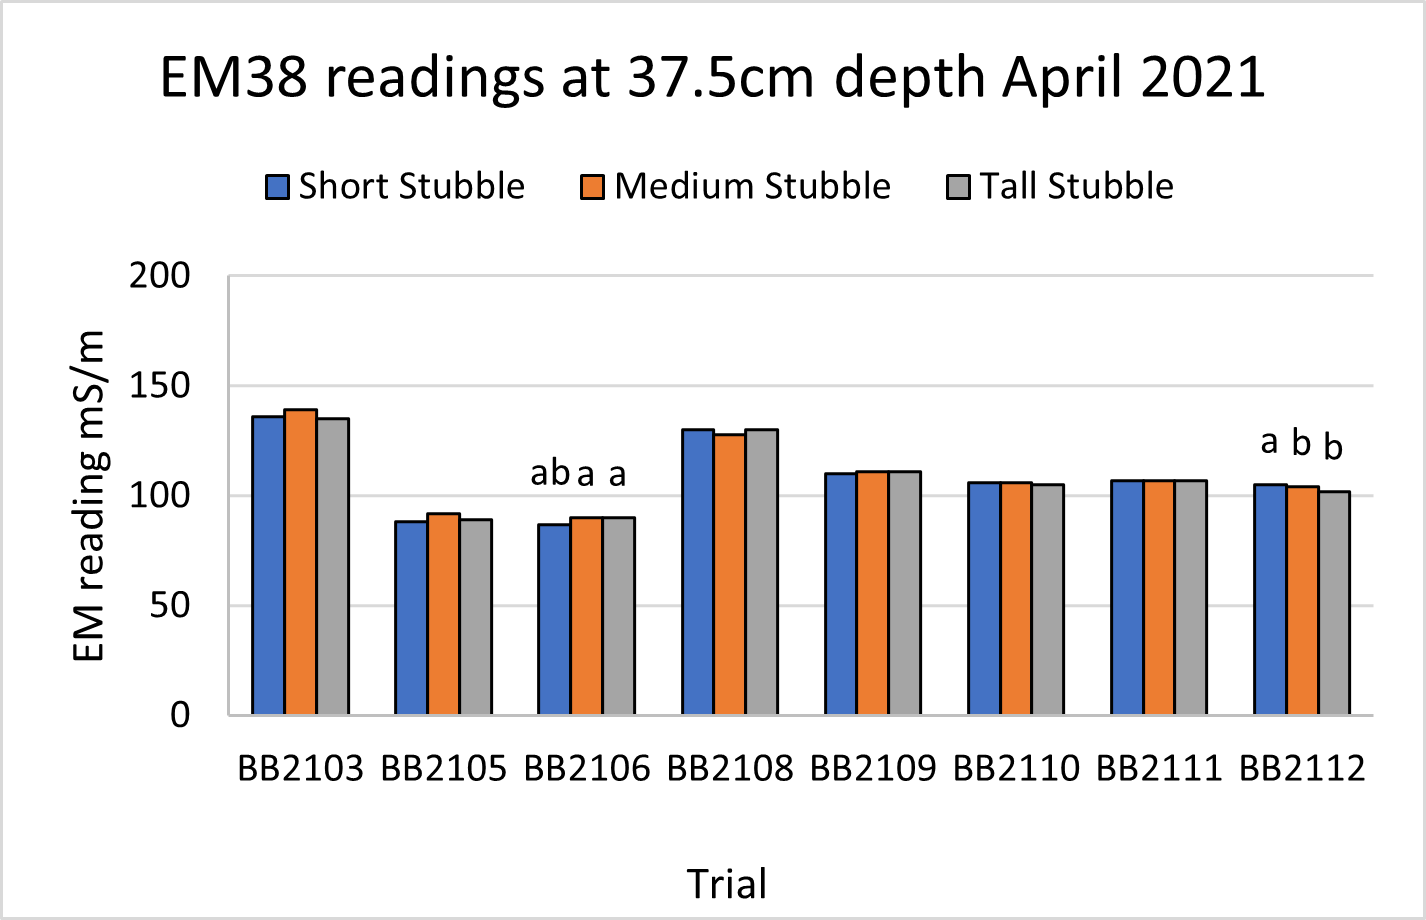 Column graph of EM38 readings at 37.5cm depth at end of summer fallow across 9 trials (April 2021).